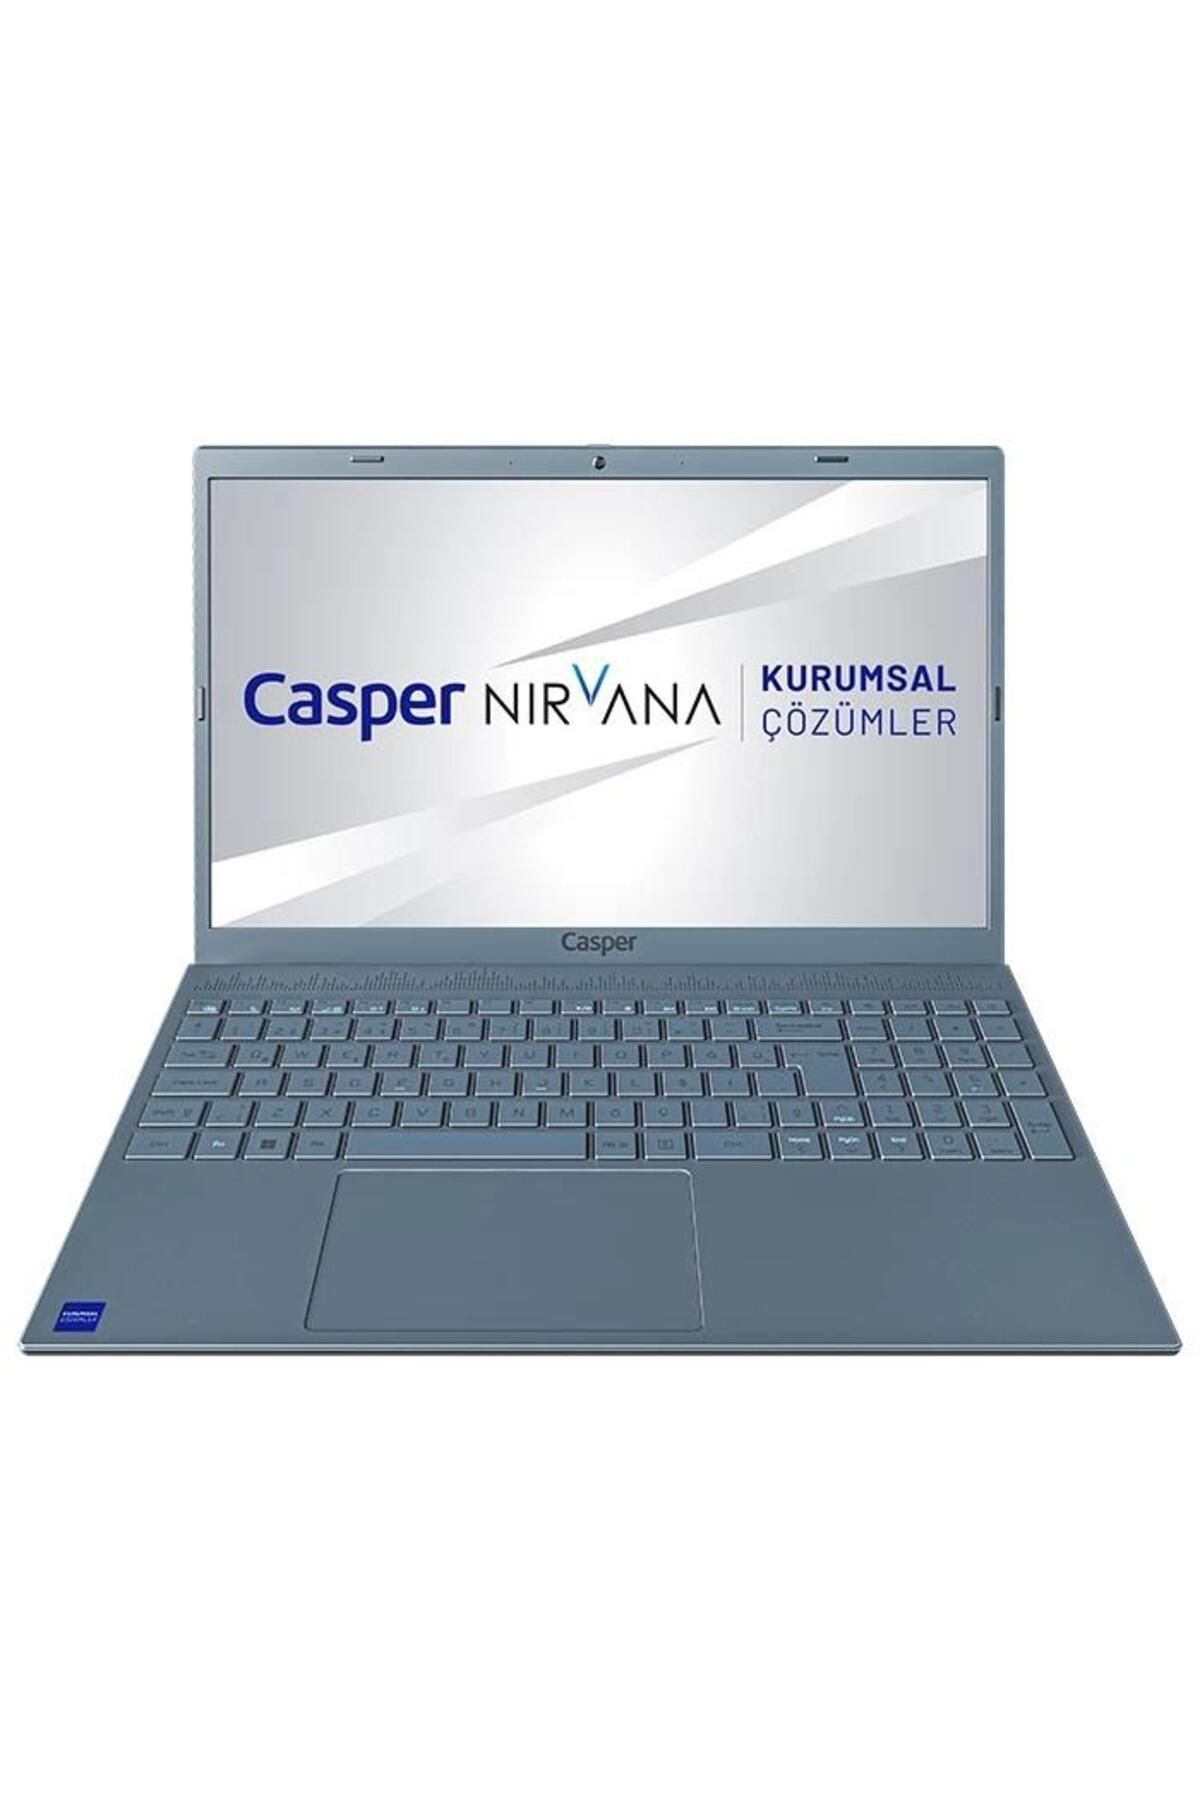 Casper Nirvana 15.6"gri C600.1155-bv00x-g-f-i5/1155g7-16gb/500gb Ssd Iris Plus G7 Freedos Notebook